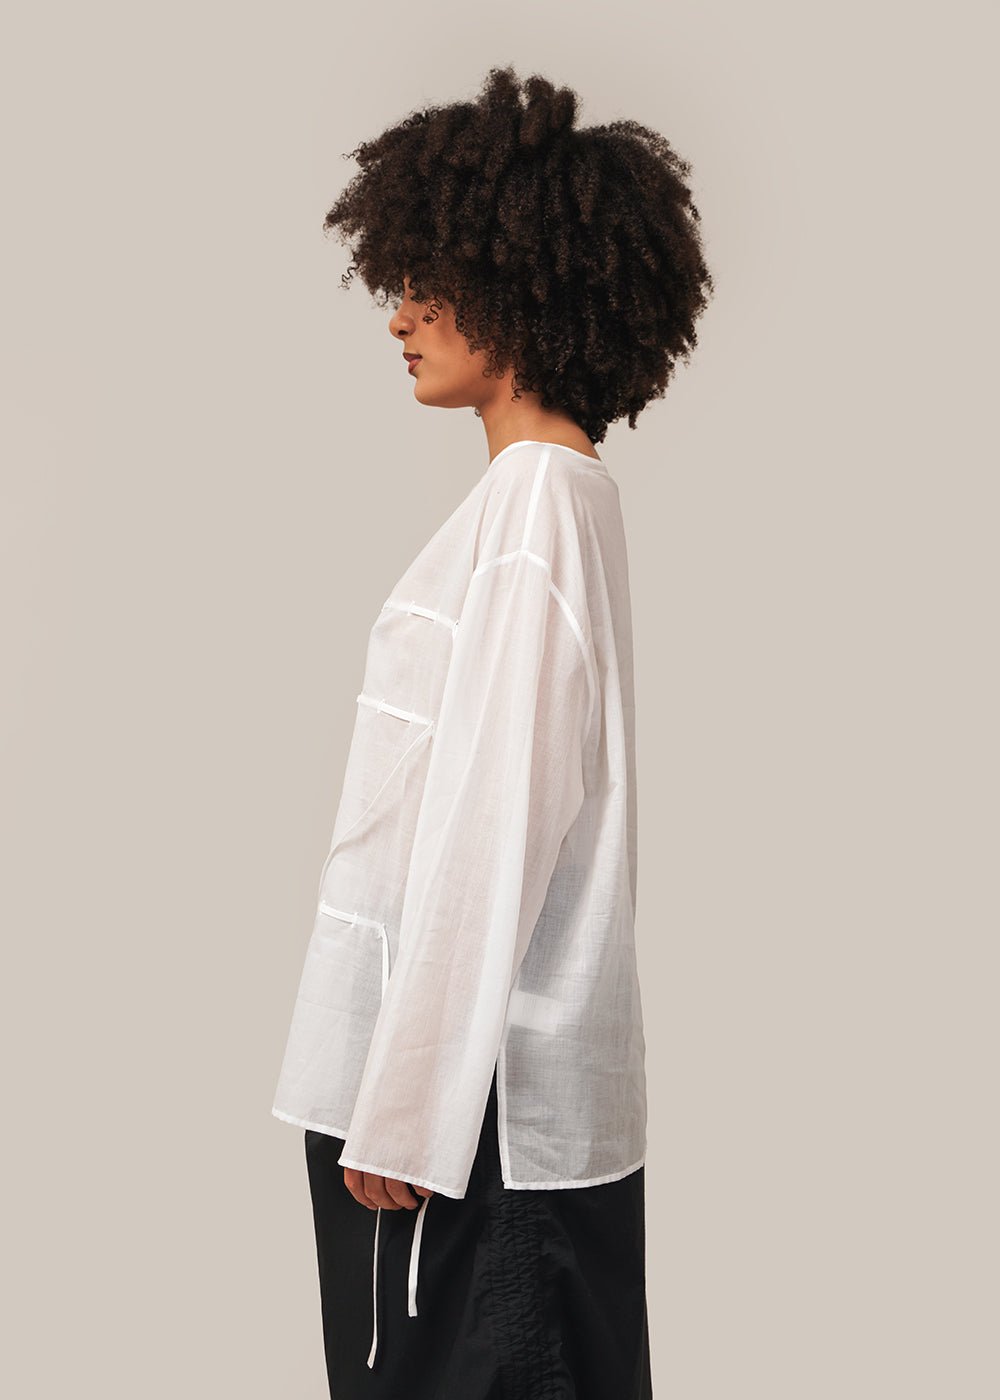 AMOMENTO White Sheer Cotton Drawstring Top - New Classics Studios Sustainable Ethical Fashion Canada